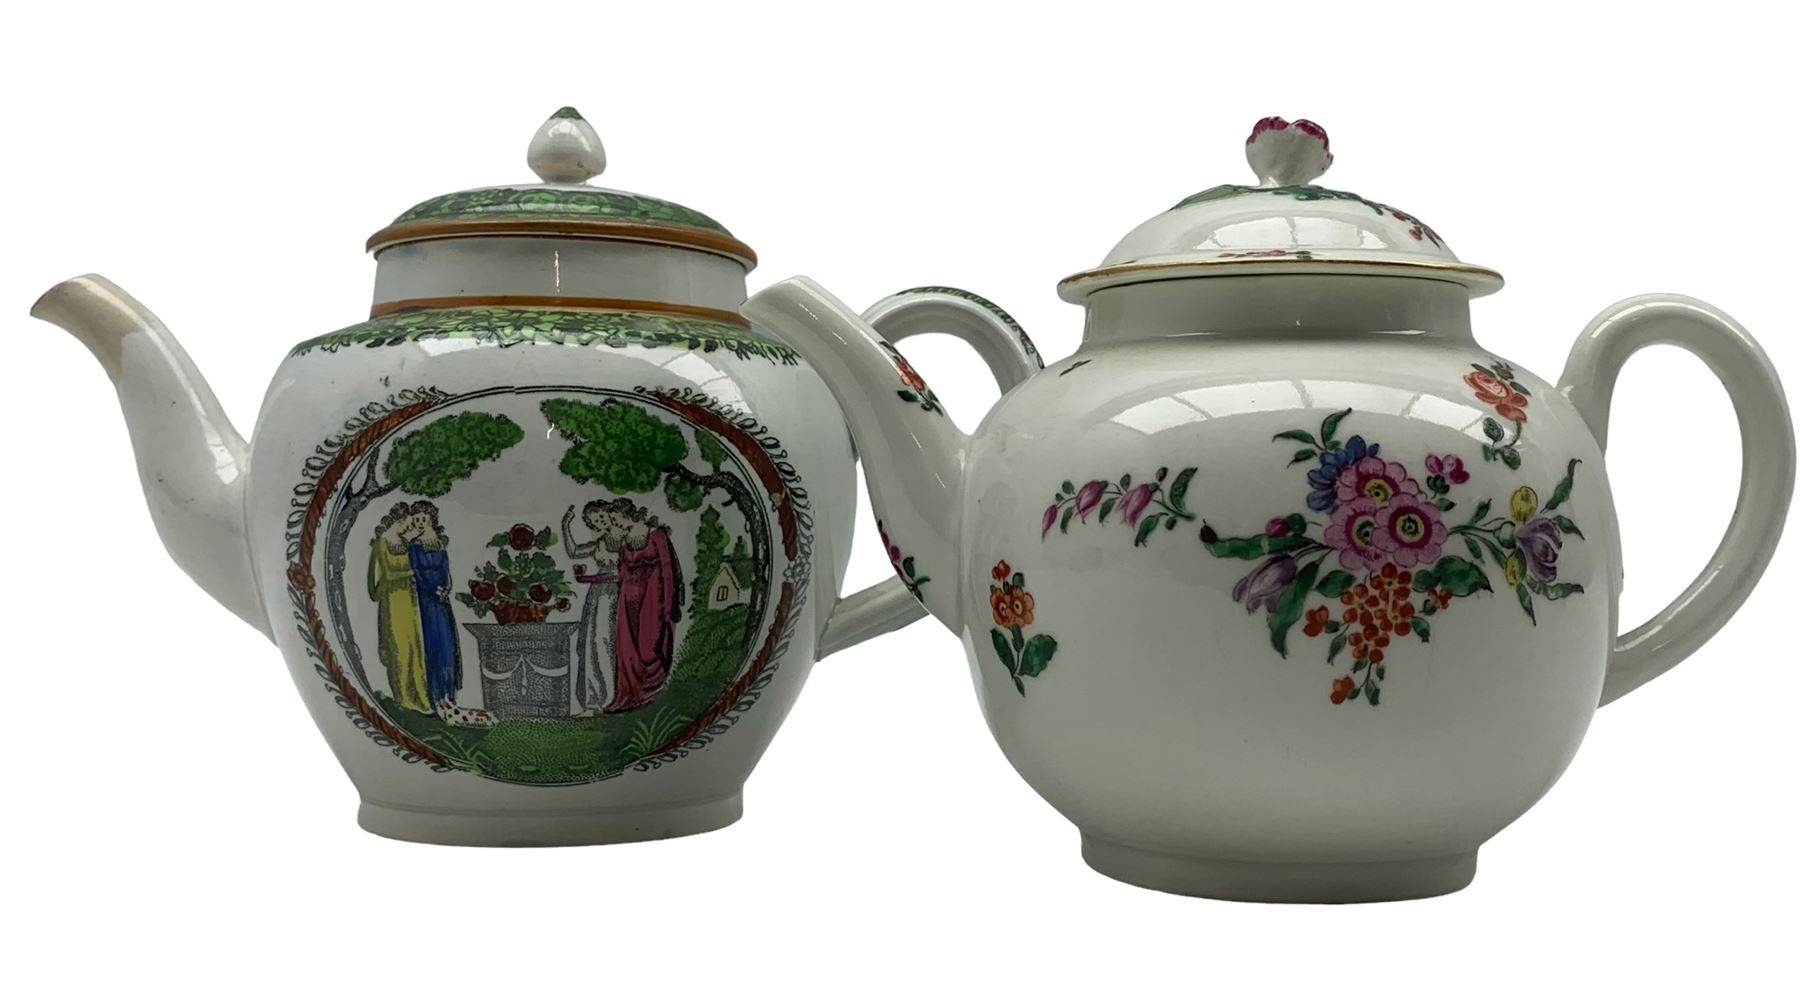 18th century English globular teapot